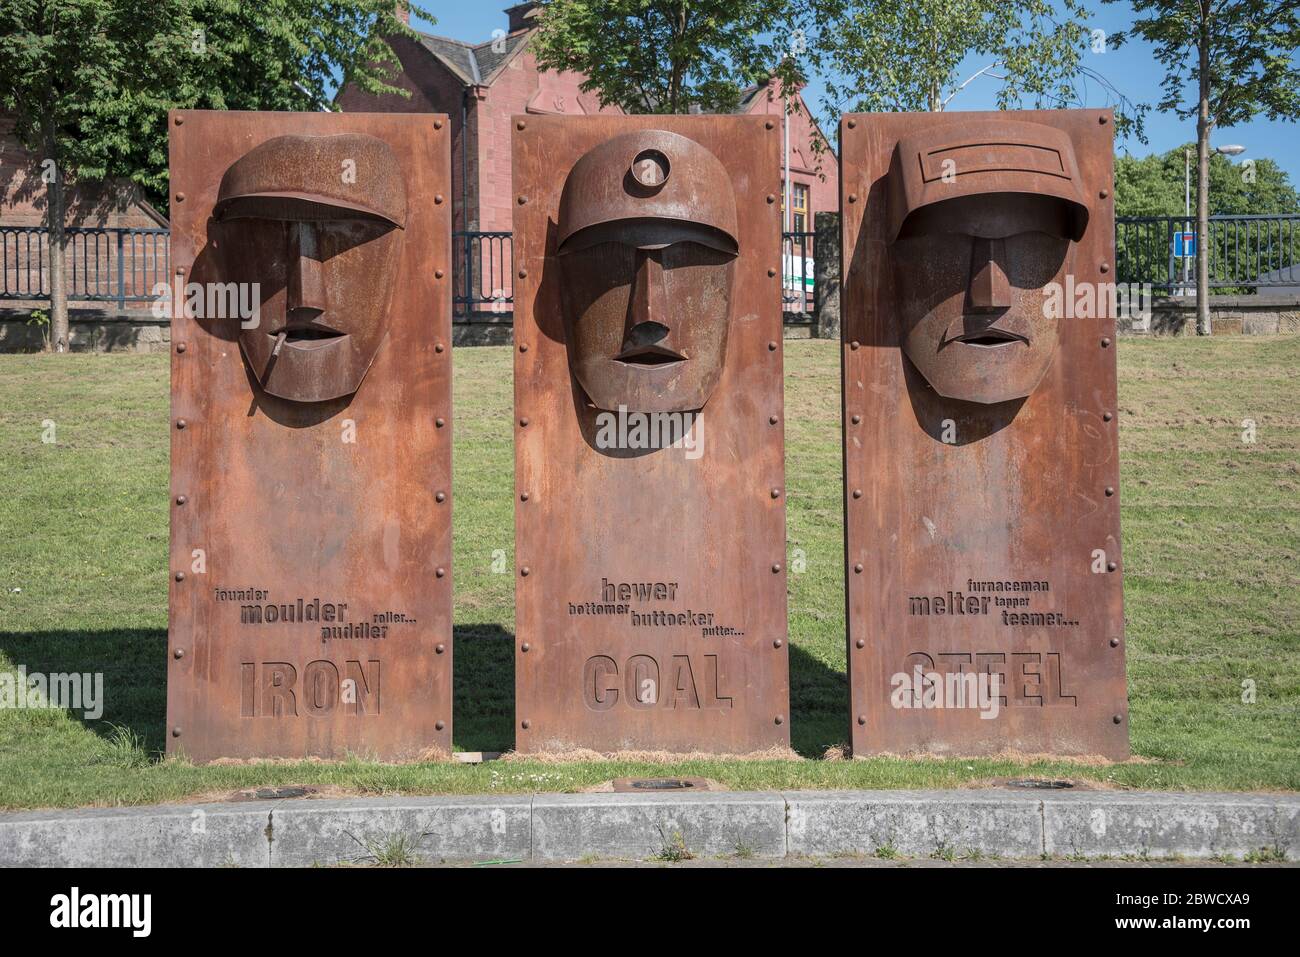 The Miners, Iron, Coal and Steel sculptures at Coatbridge, Lanarkshire. Stock Photo